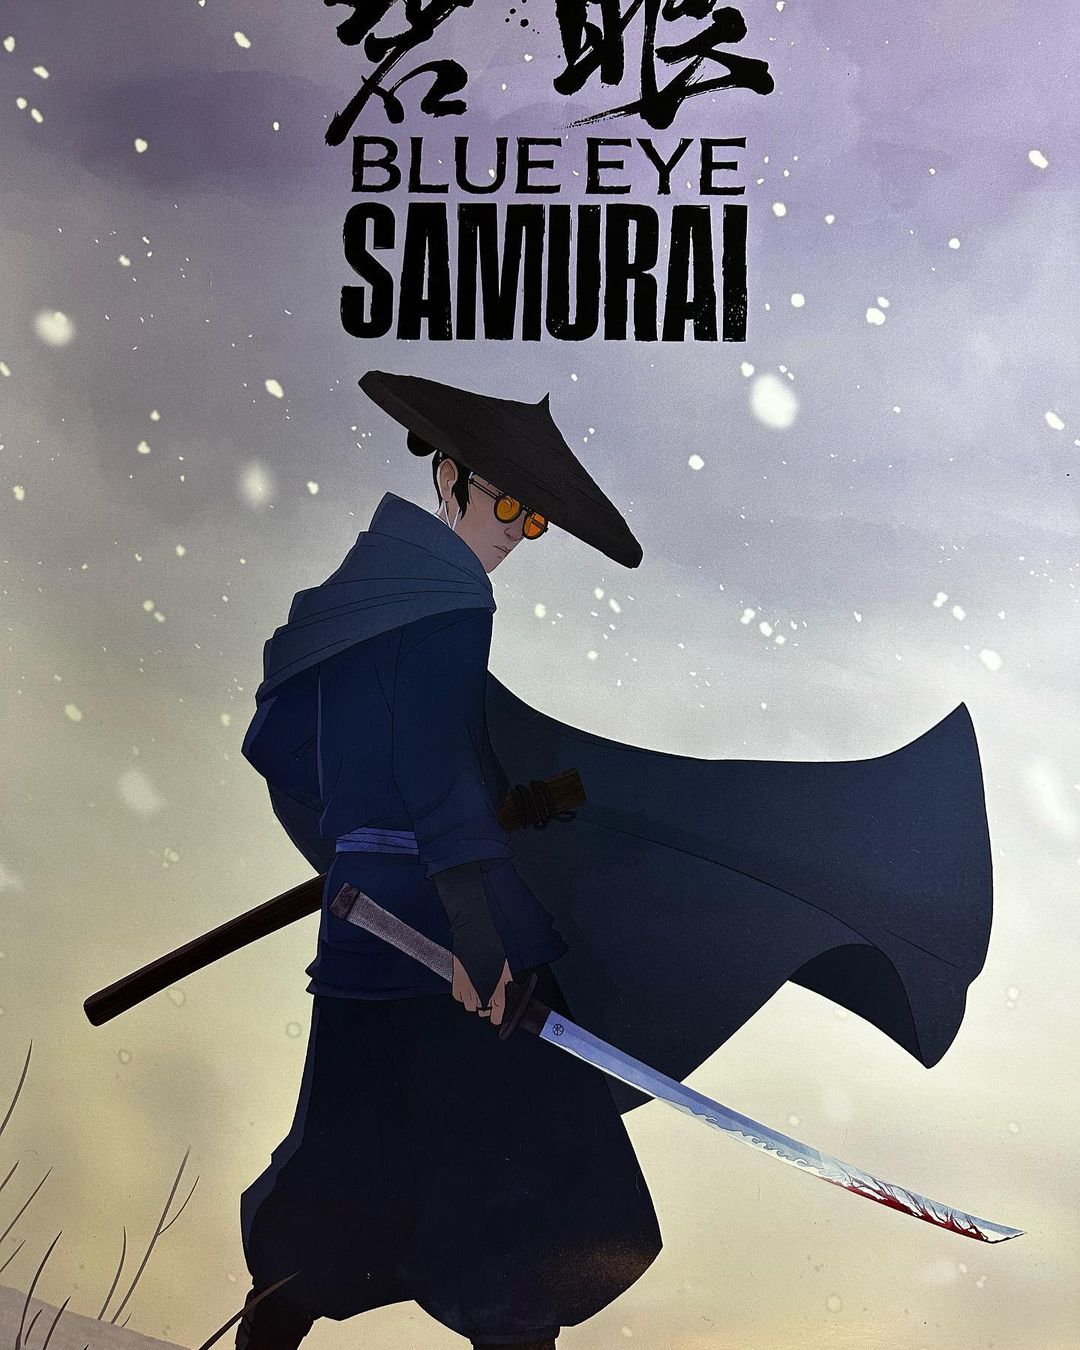 cartel samurai de ojos azules